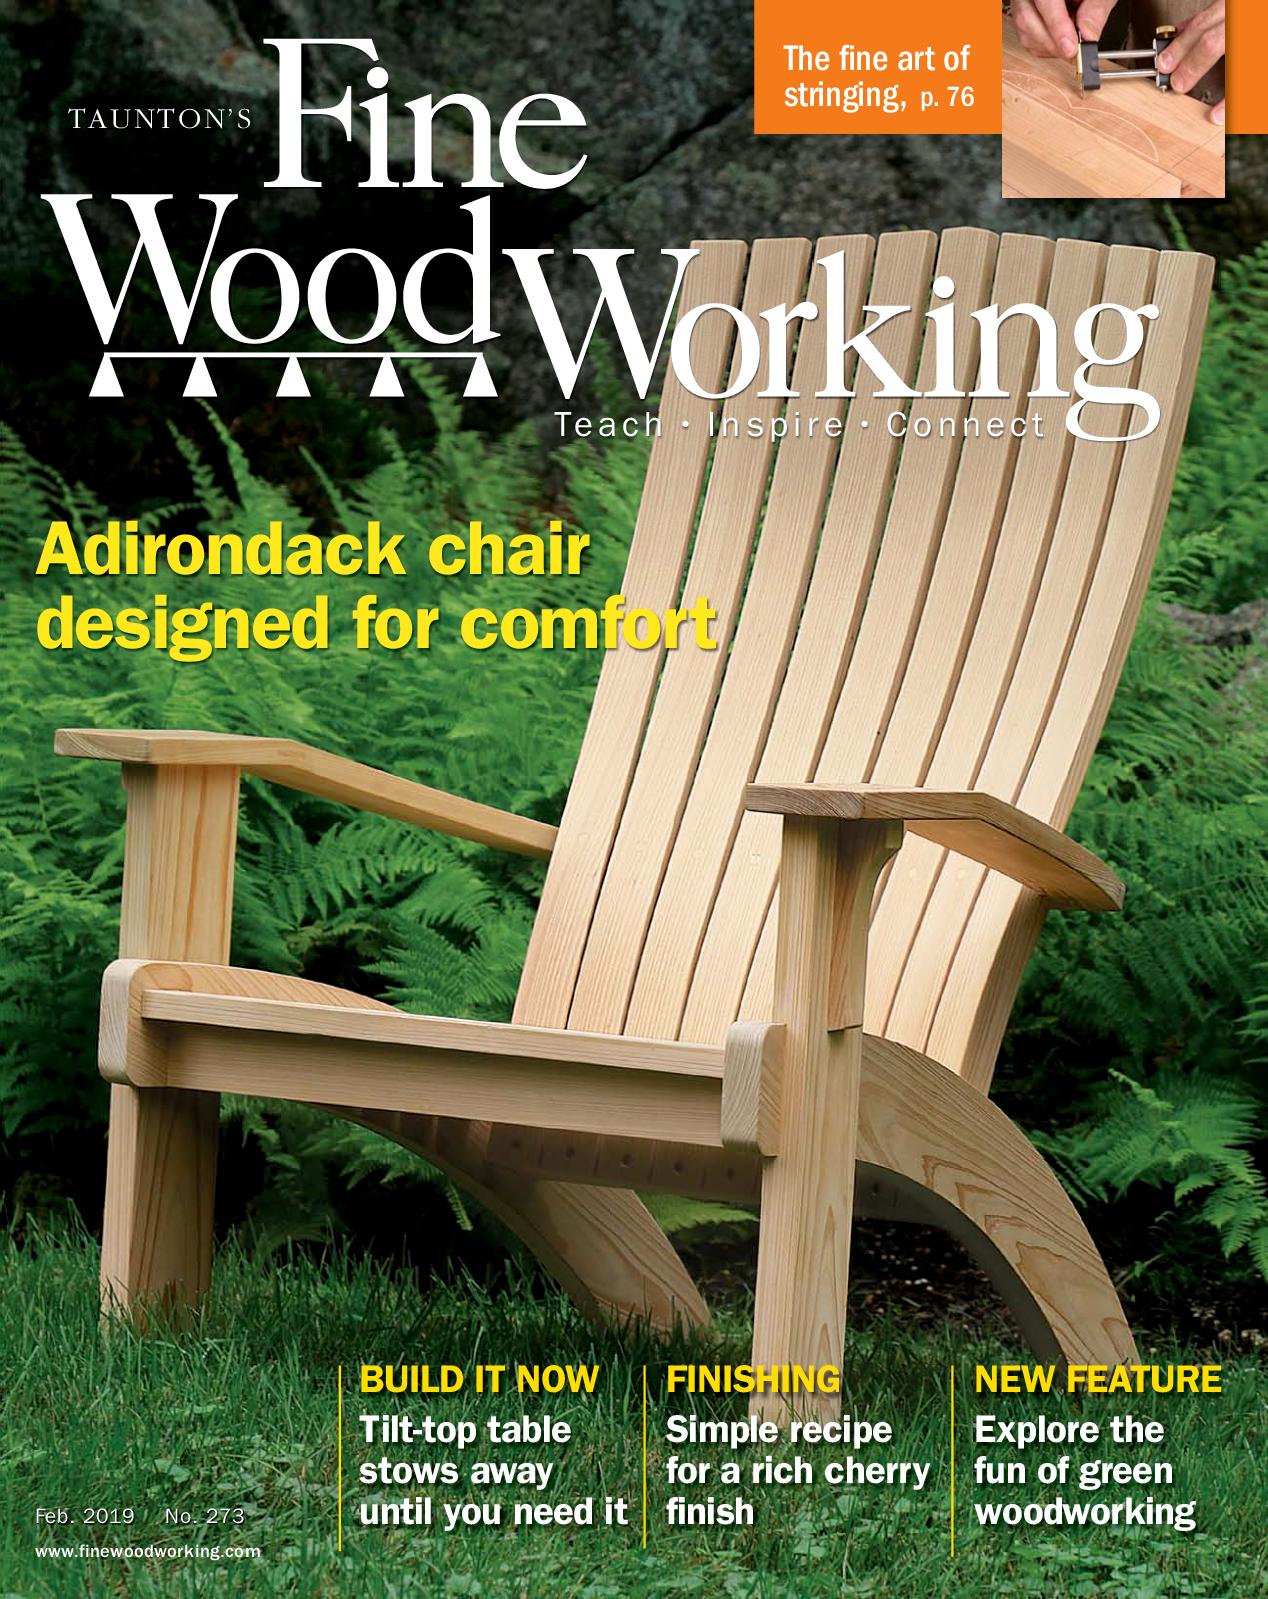 Fine Woodworking Magazine, Issue No. 273, Feb/March 2019